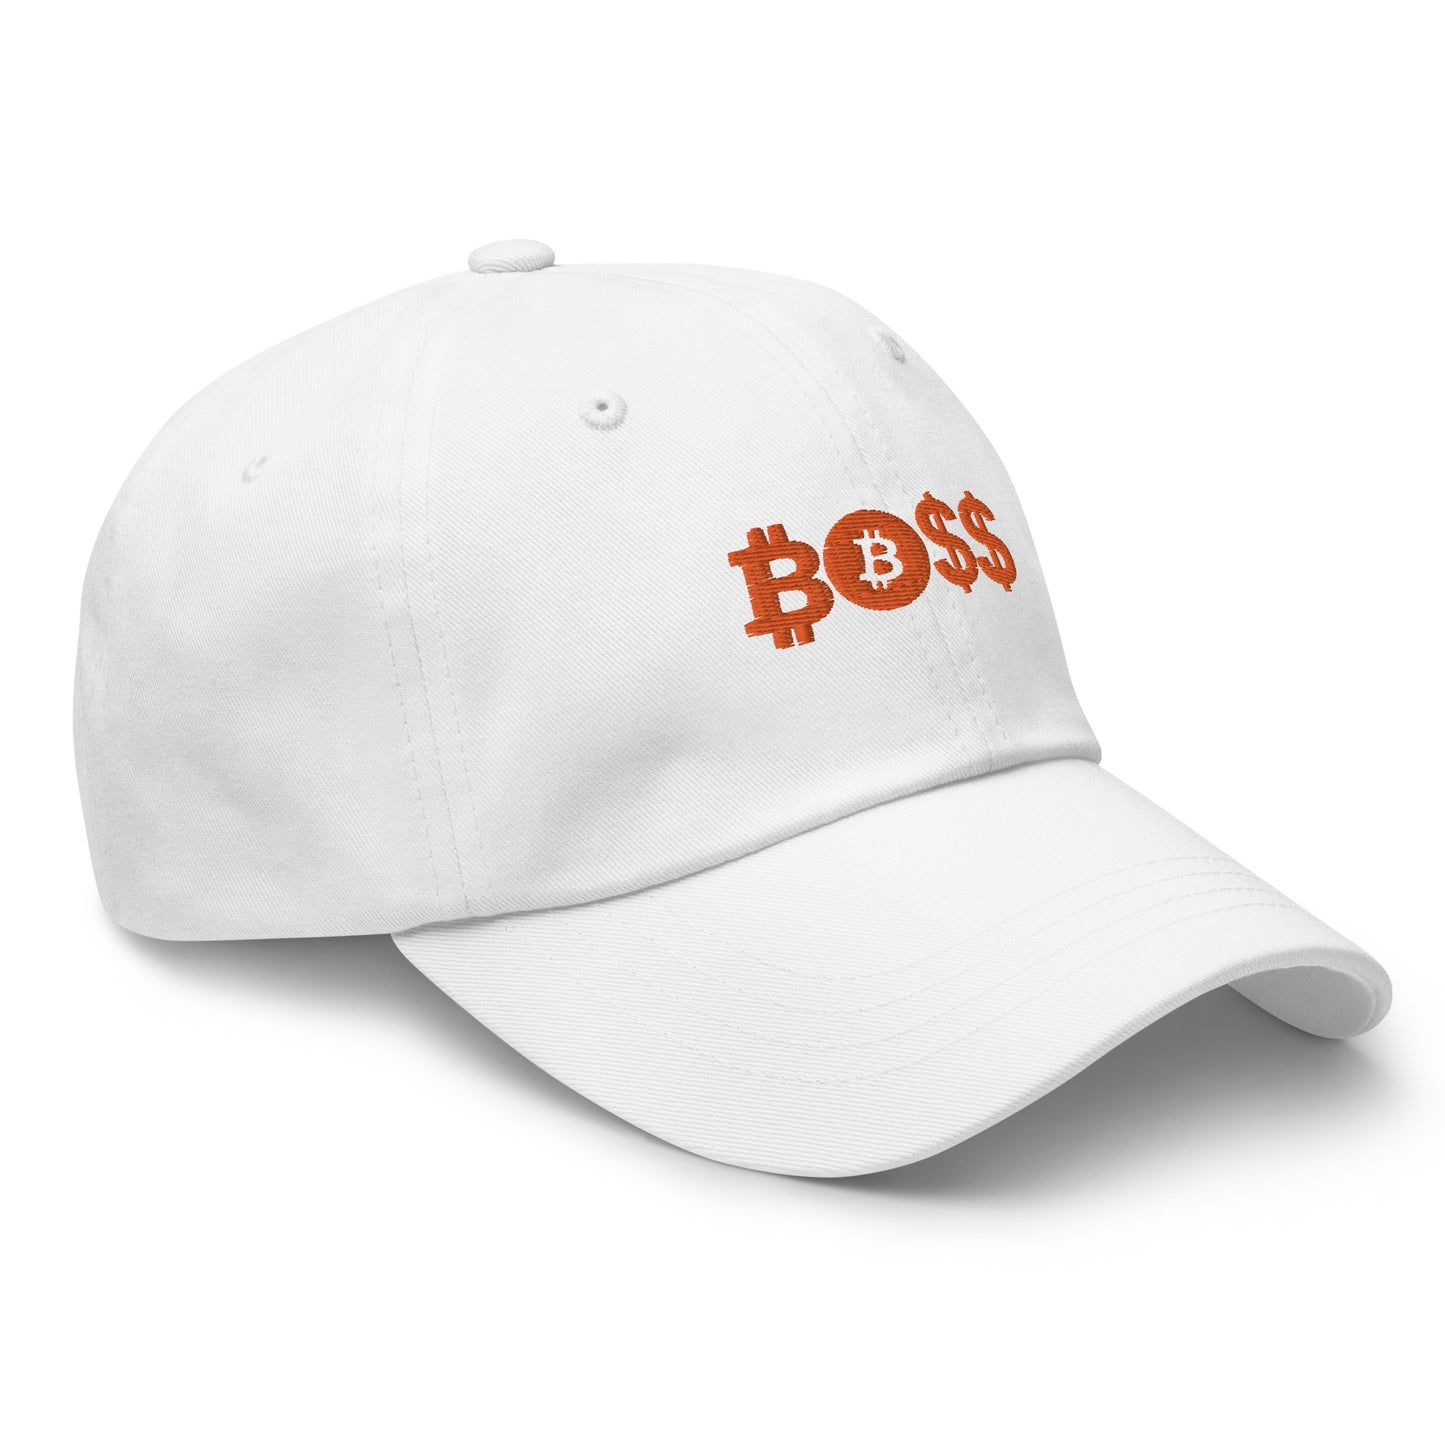 BITCOIN BOSS Comfort Basecap